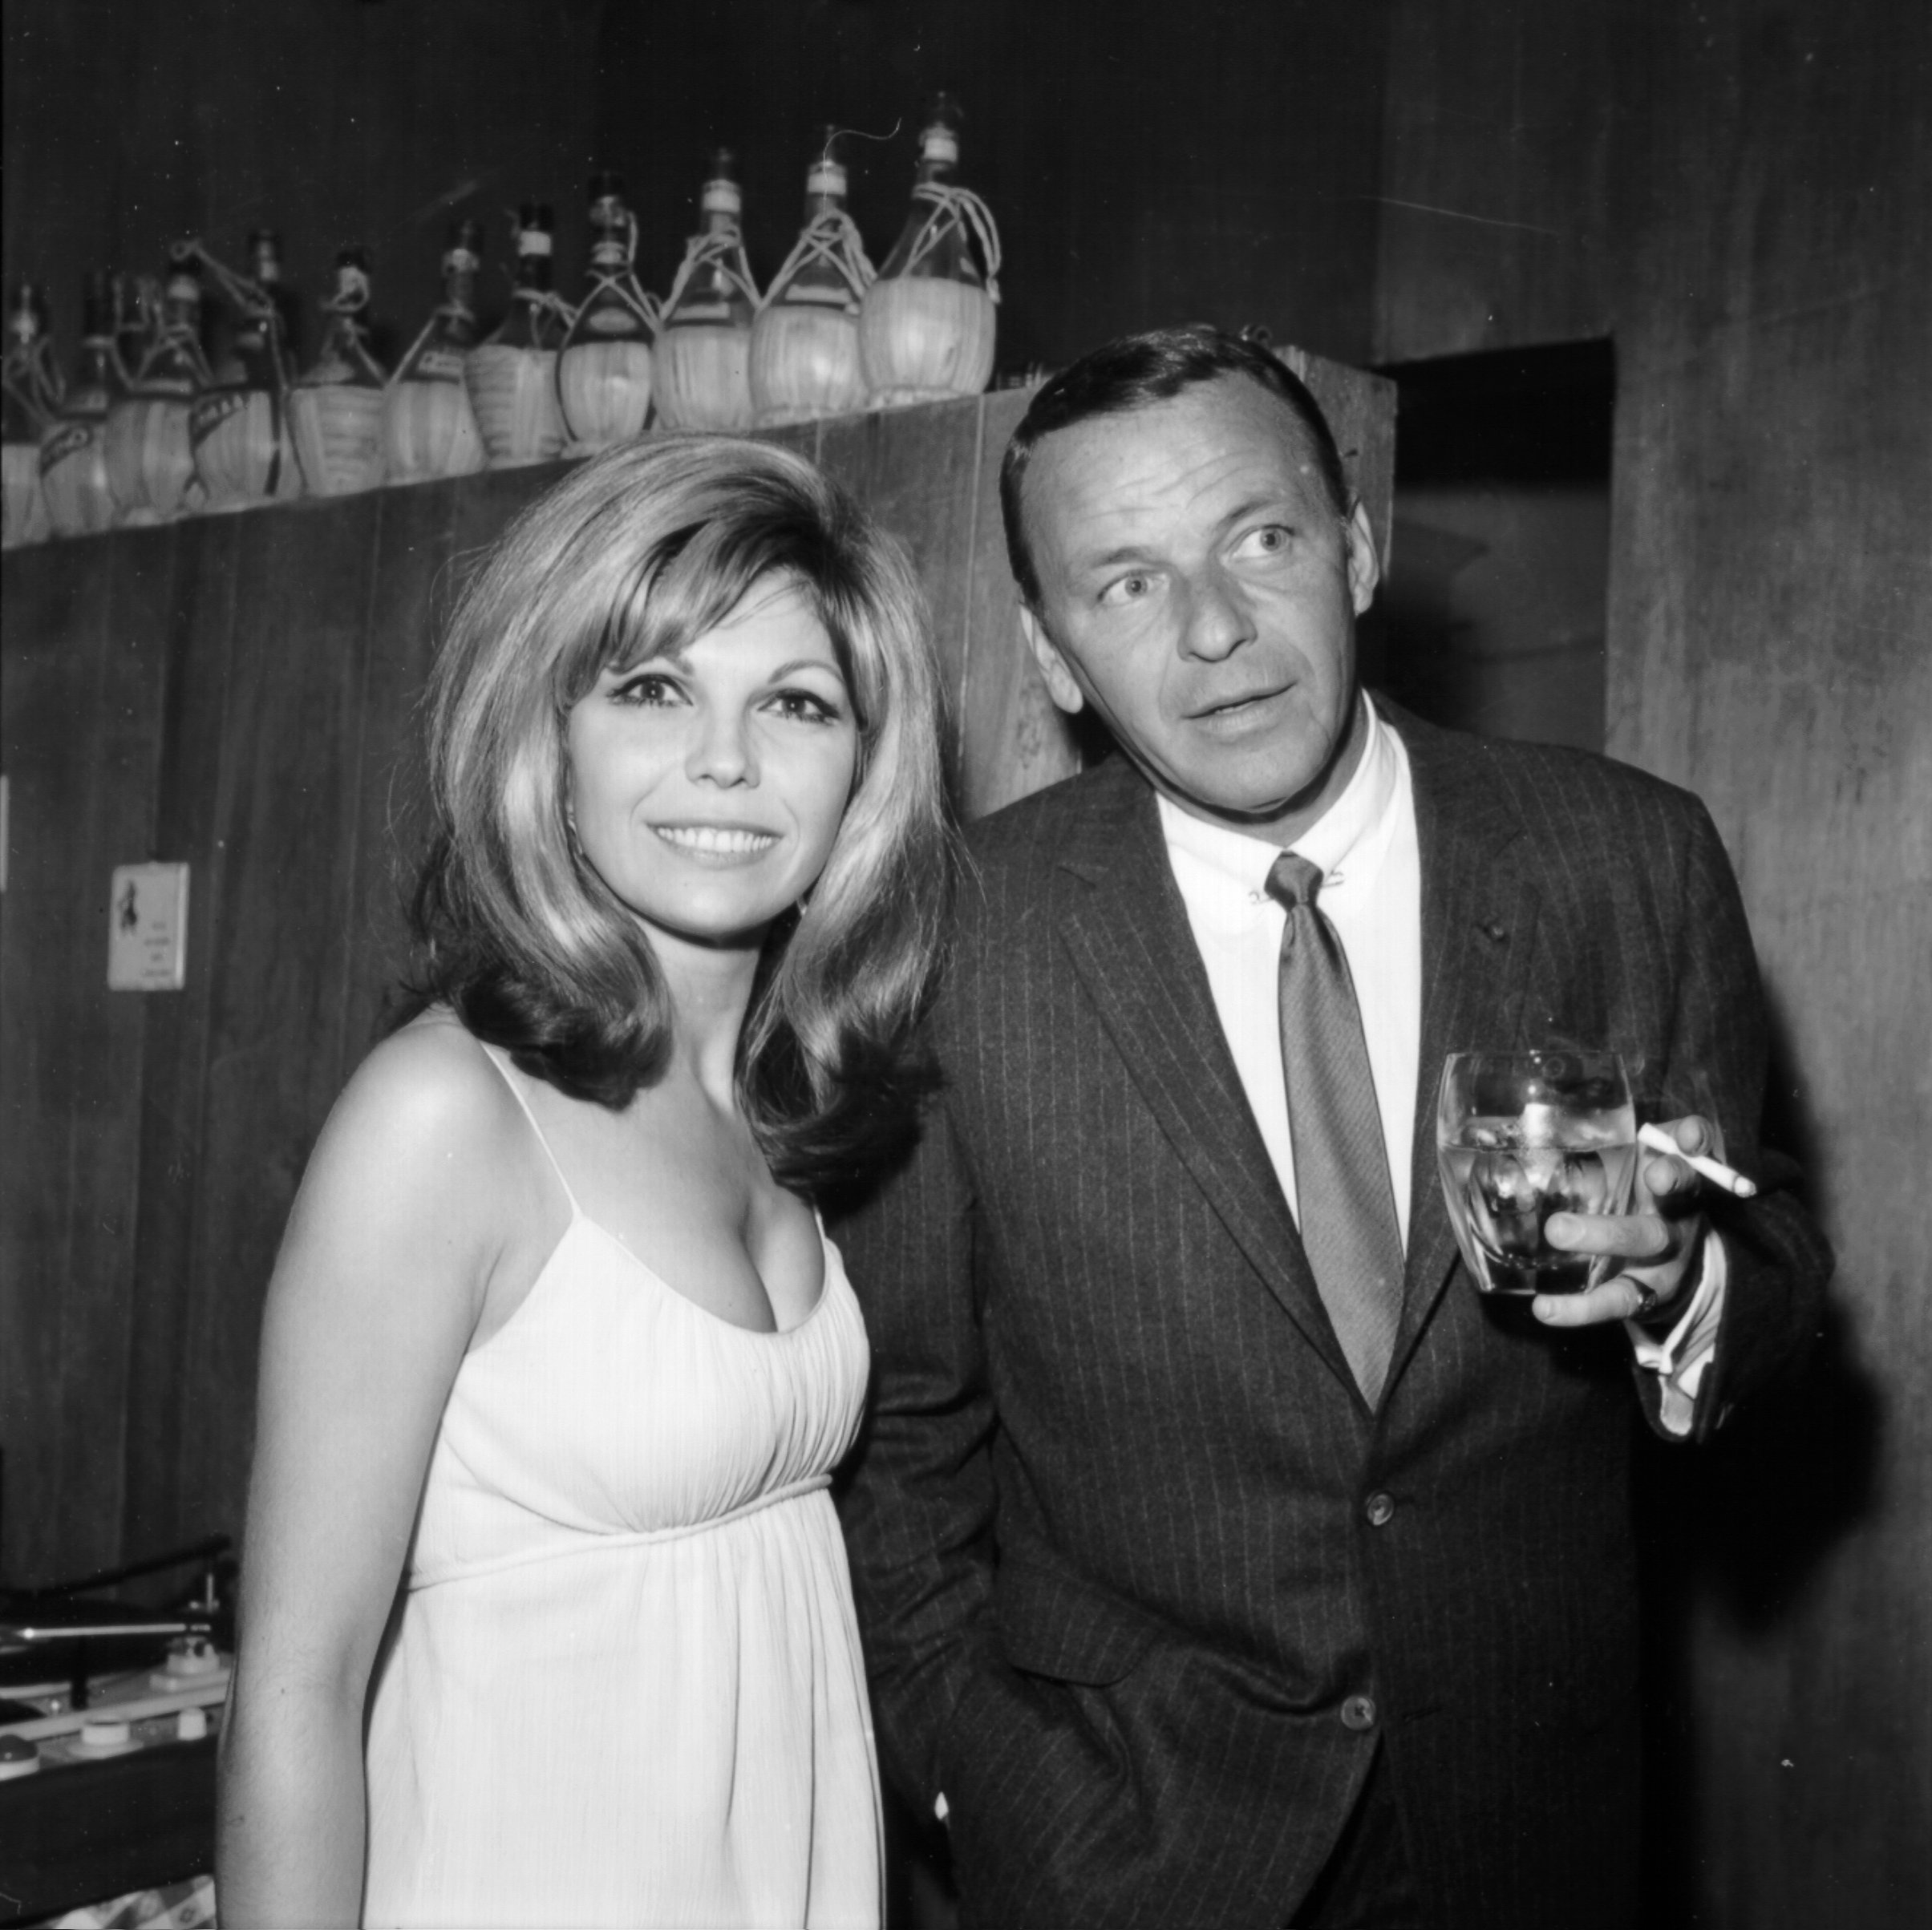 Frank Sinatra and his daughter, Nancy Sinatra, near bottles